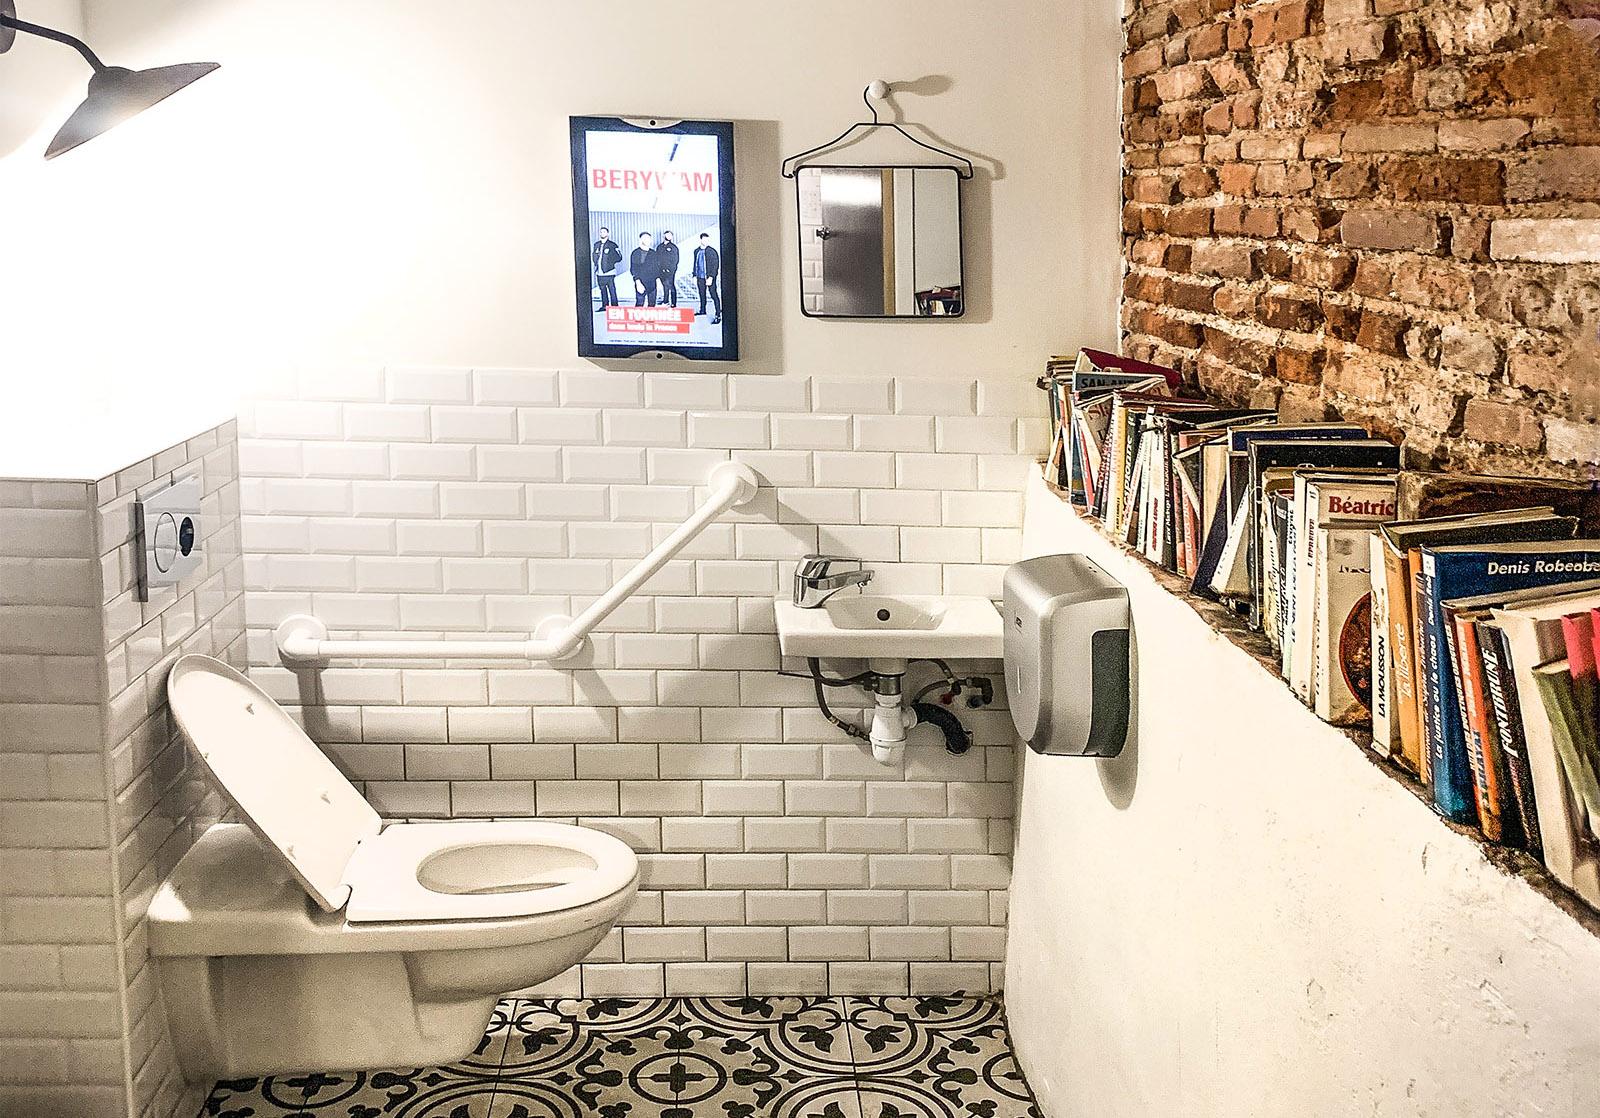 Toilette im Bistro 12 von Saint-Cyprien, Toulouse. Foto: Hilke Maunder